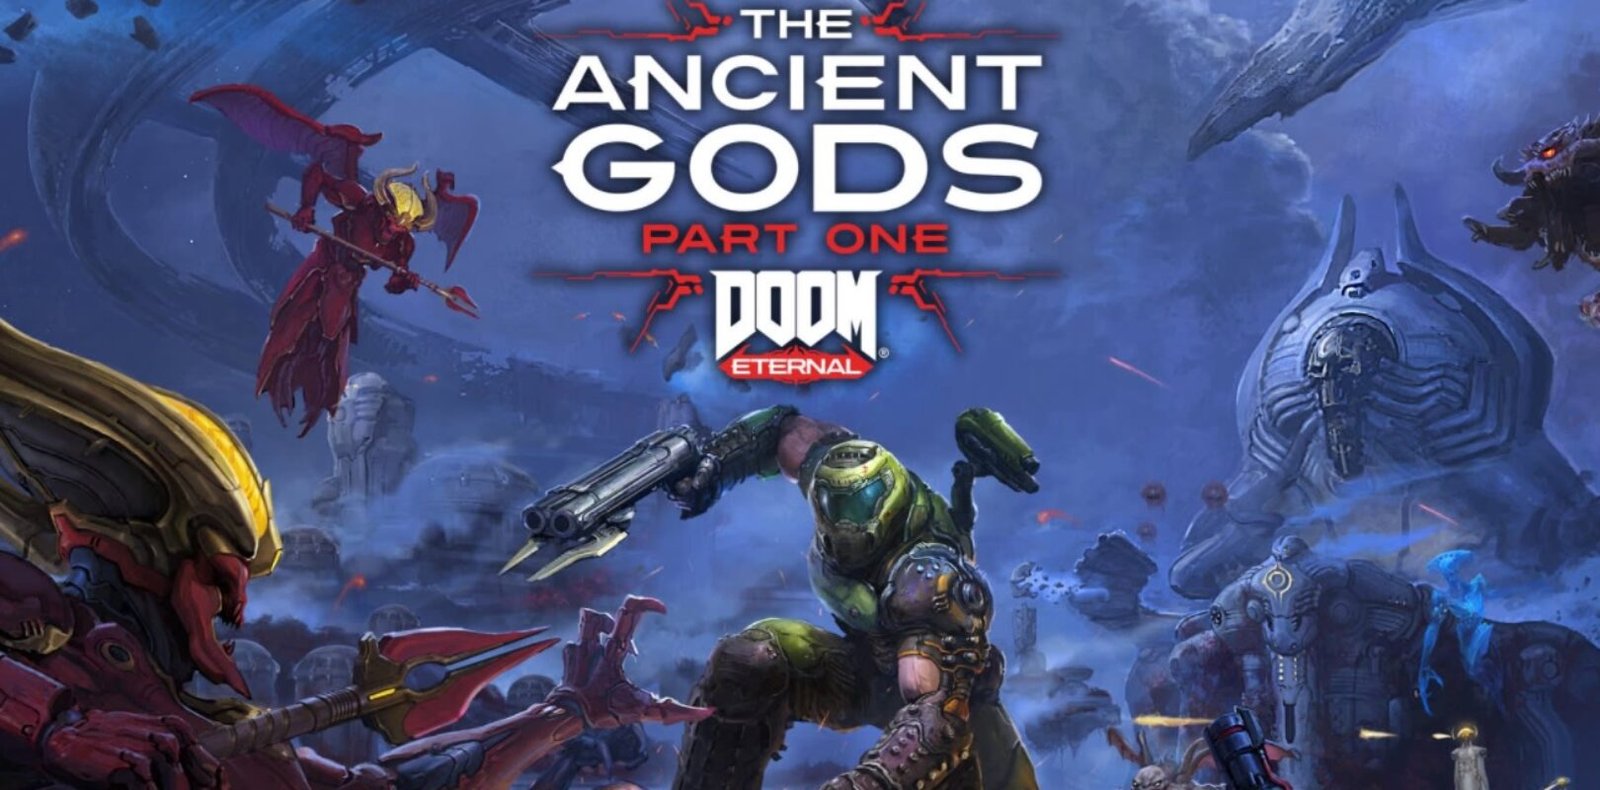 Eternal nintendo switch. Дум Этернал Нинтендо свитч. Doom Eternal: the Ancient Gods – Part one. Doom Eternal Nintendo Switch.